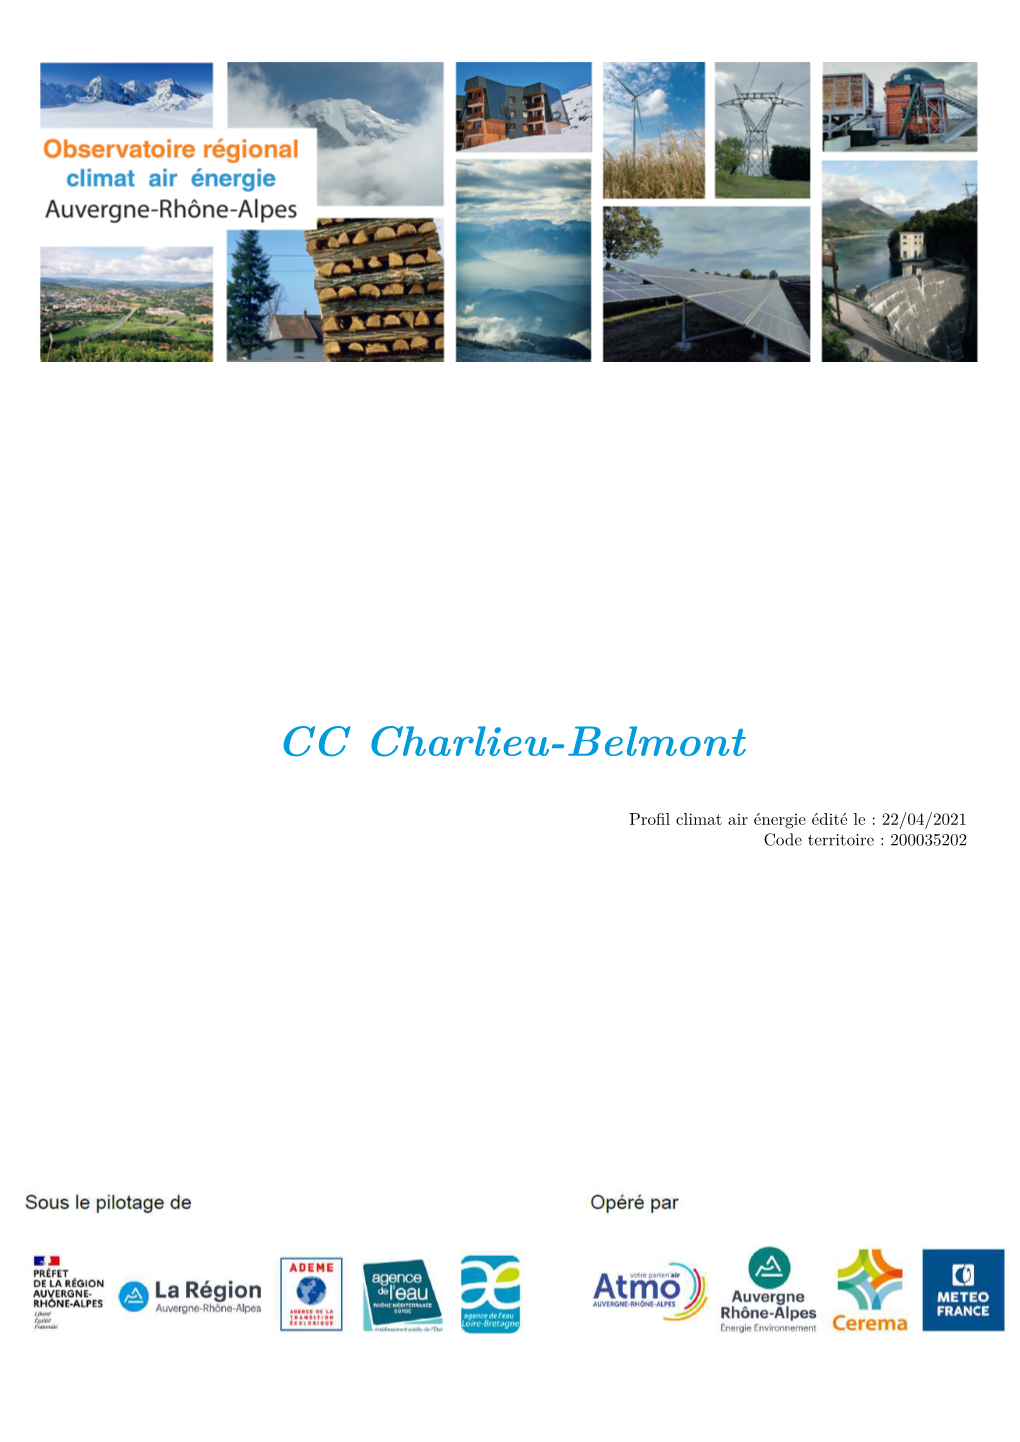 CC Charlieu-Belmont